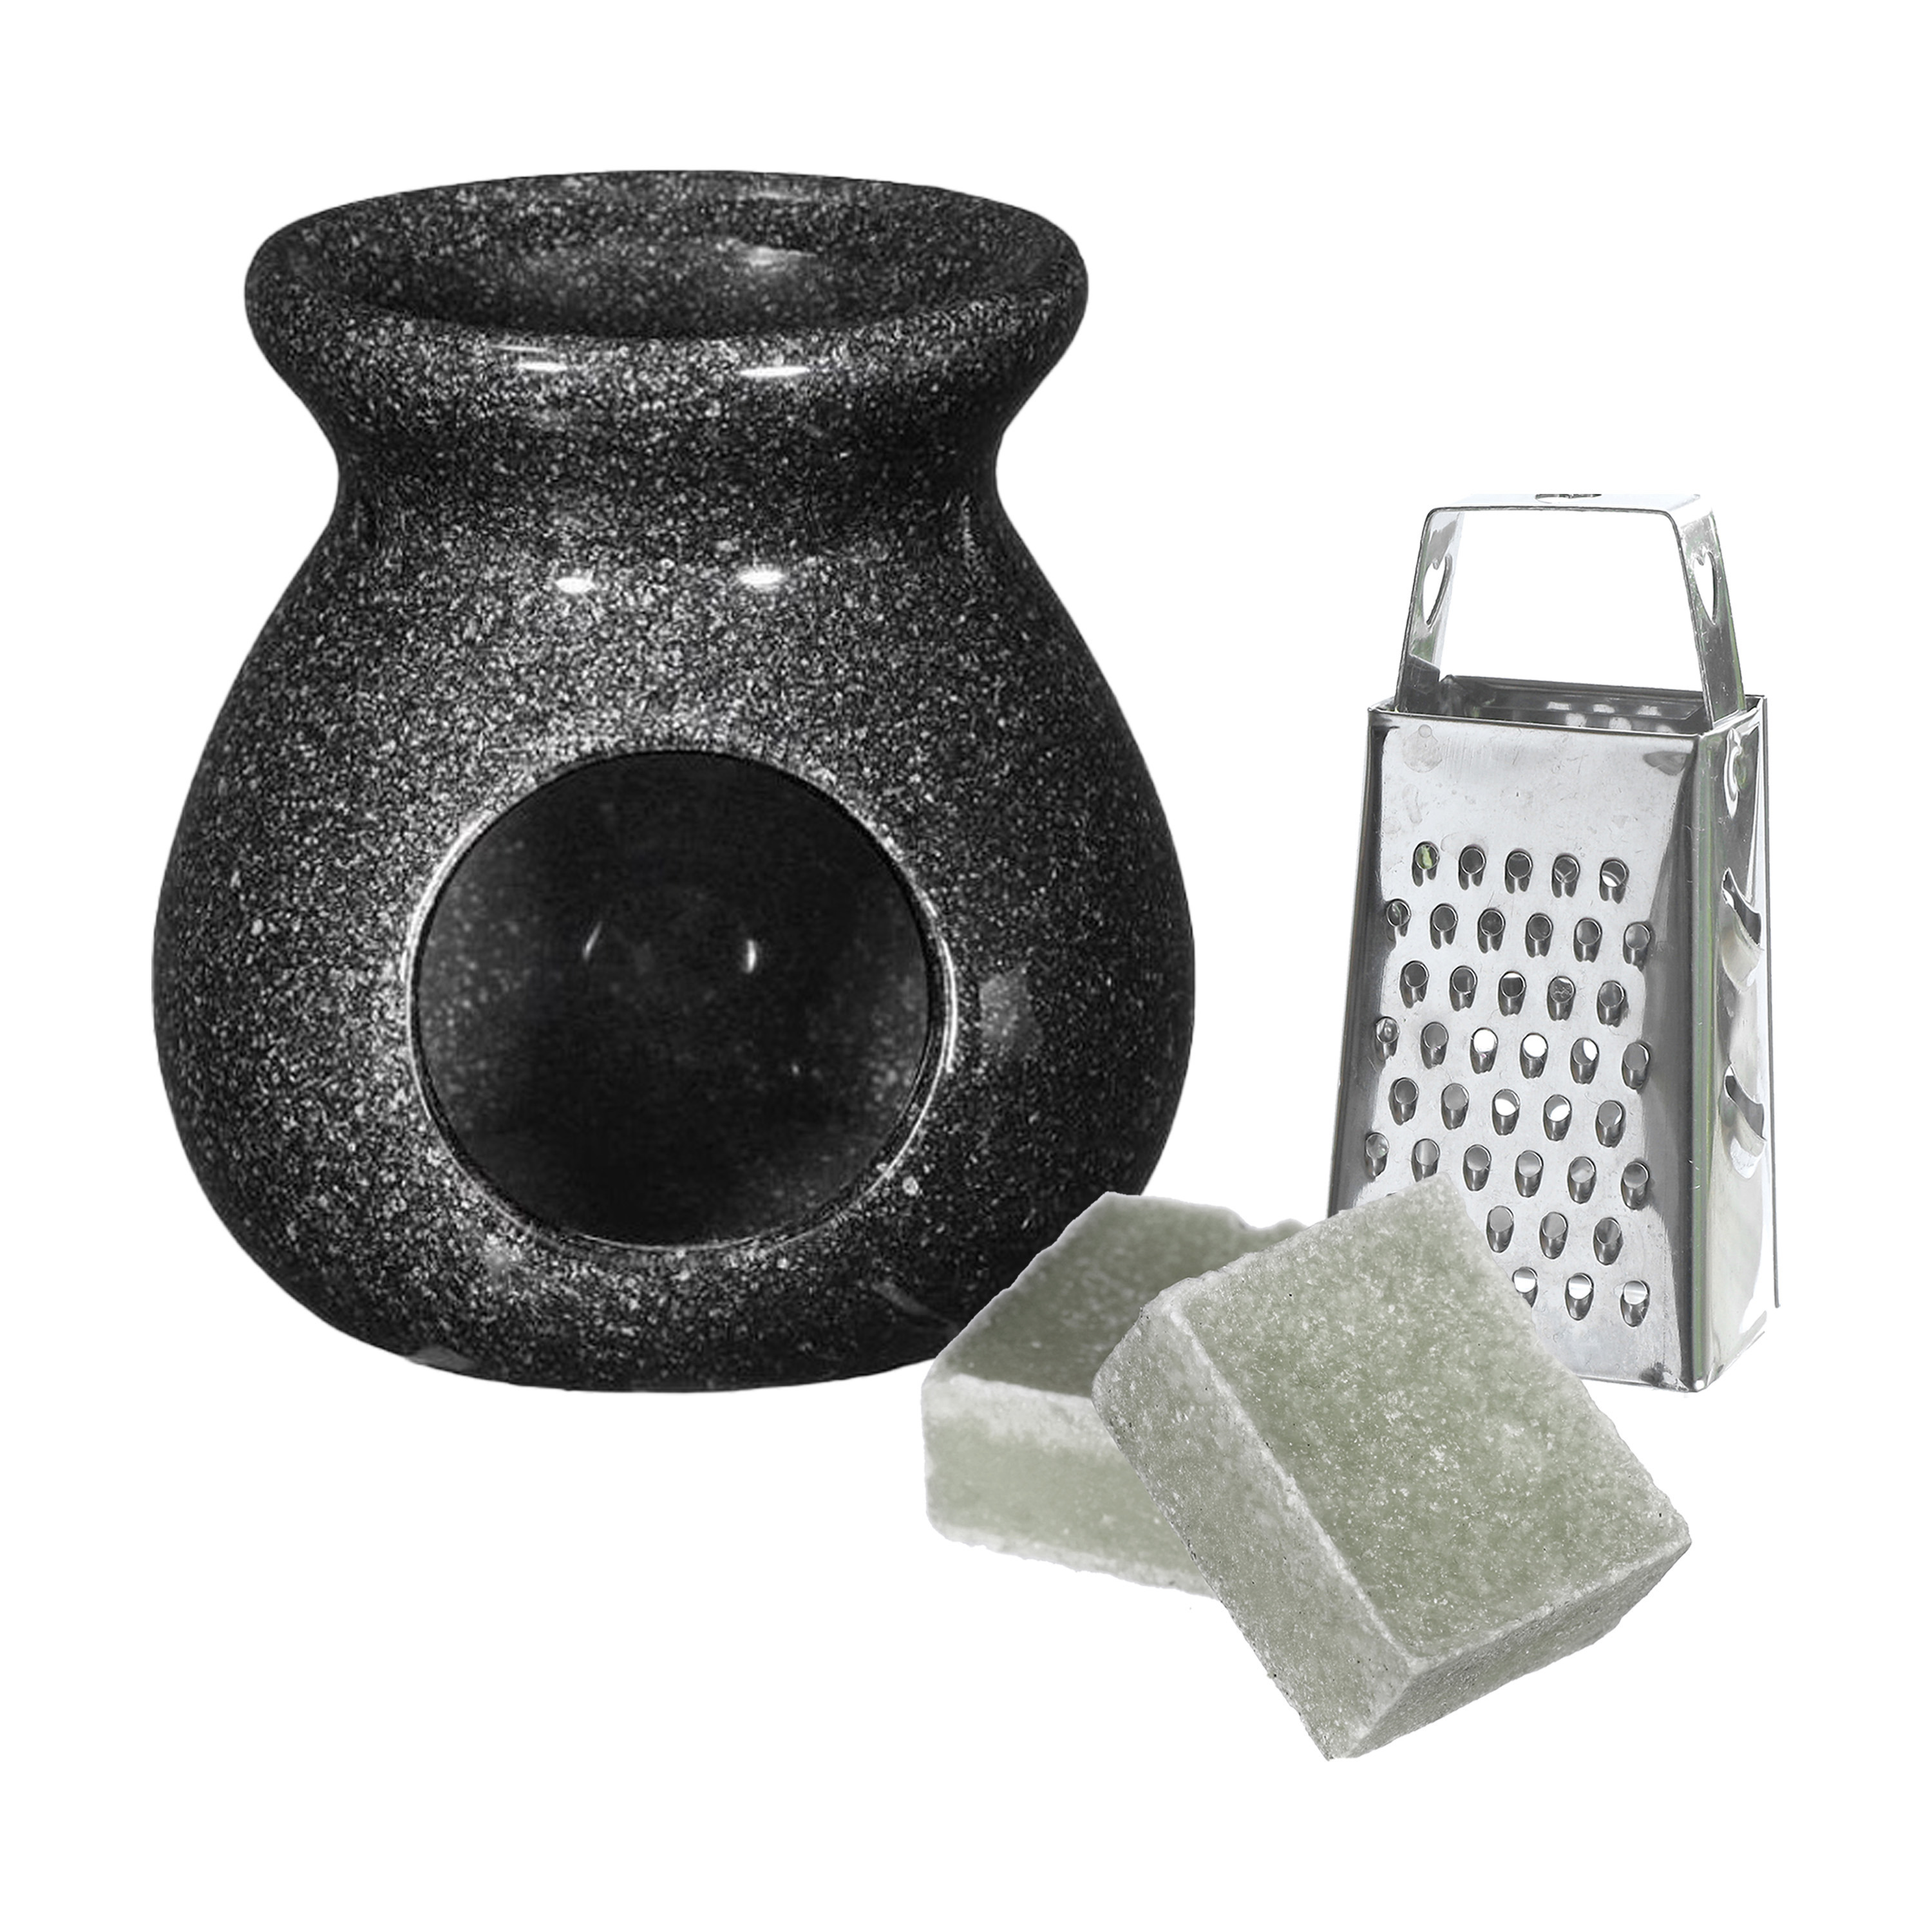 Amberblokjes-geurblokjes cadeauset eucalyptus geur inclusief geurbrander en mini rasp